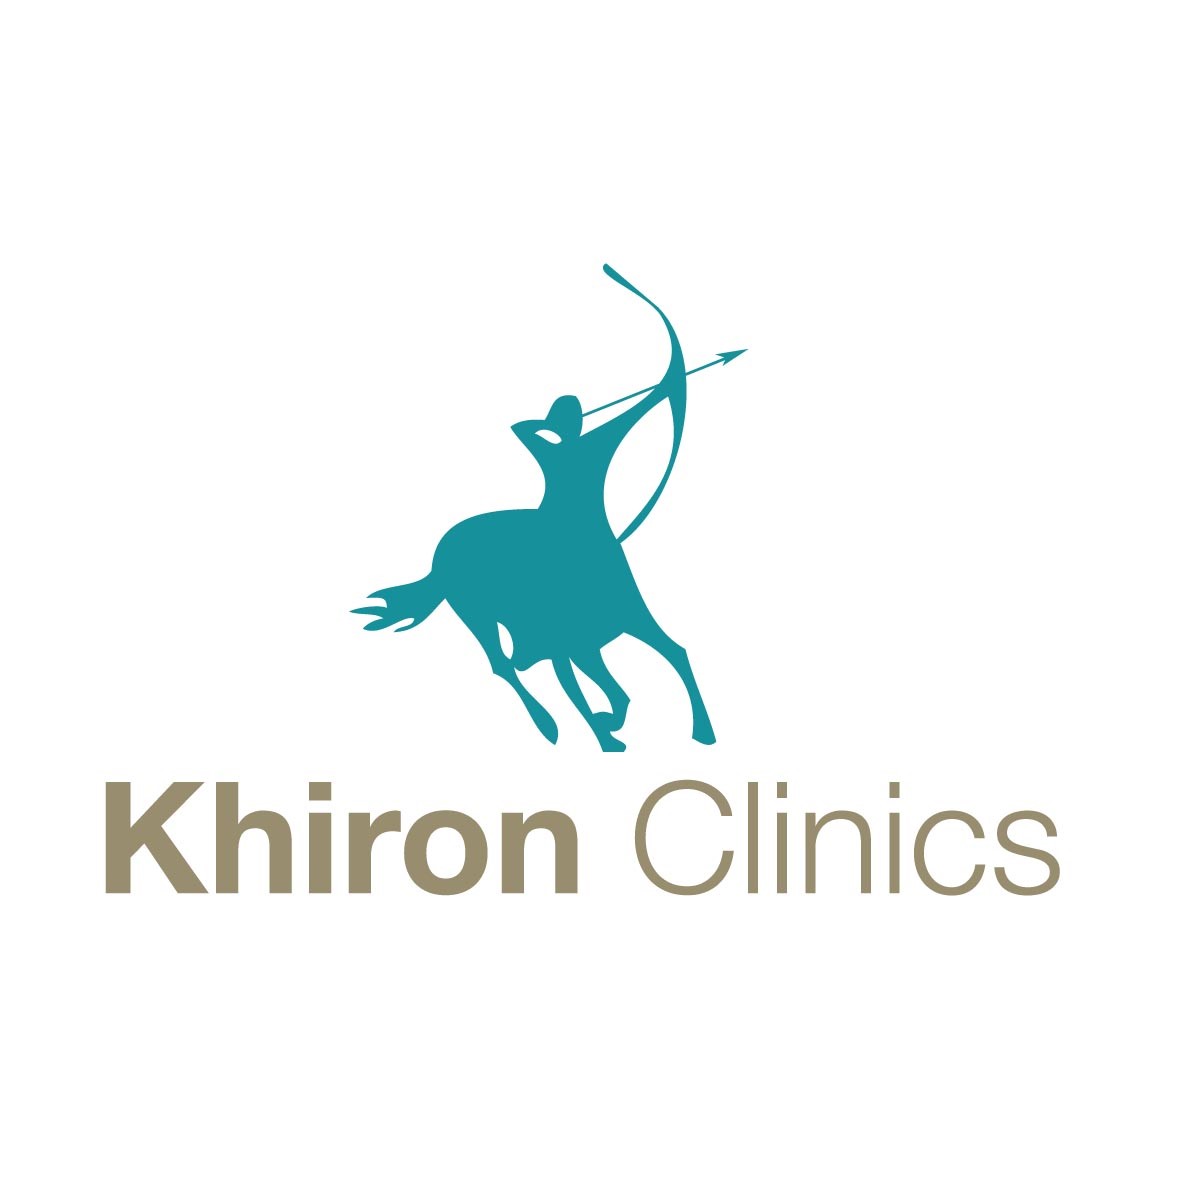 Khiron Clinics - Logo